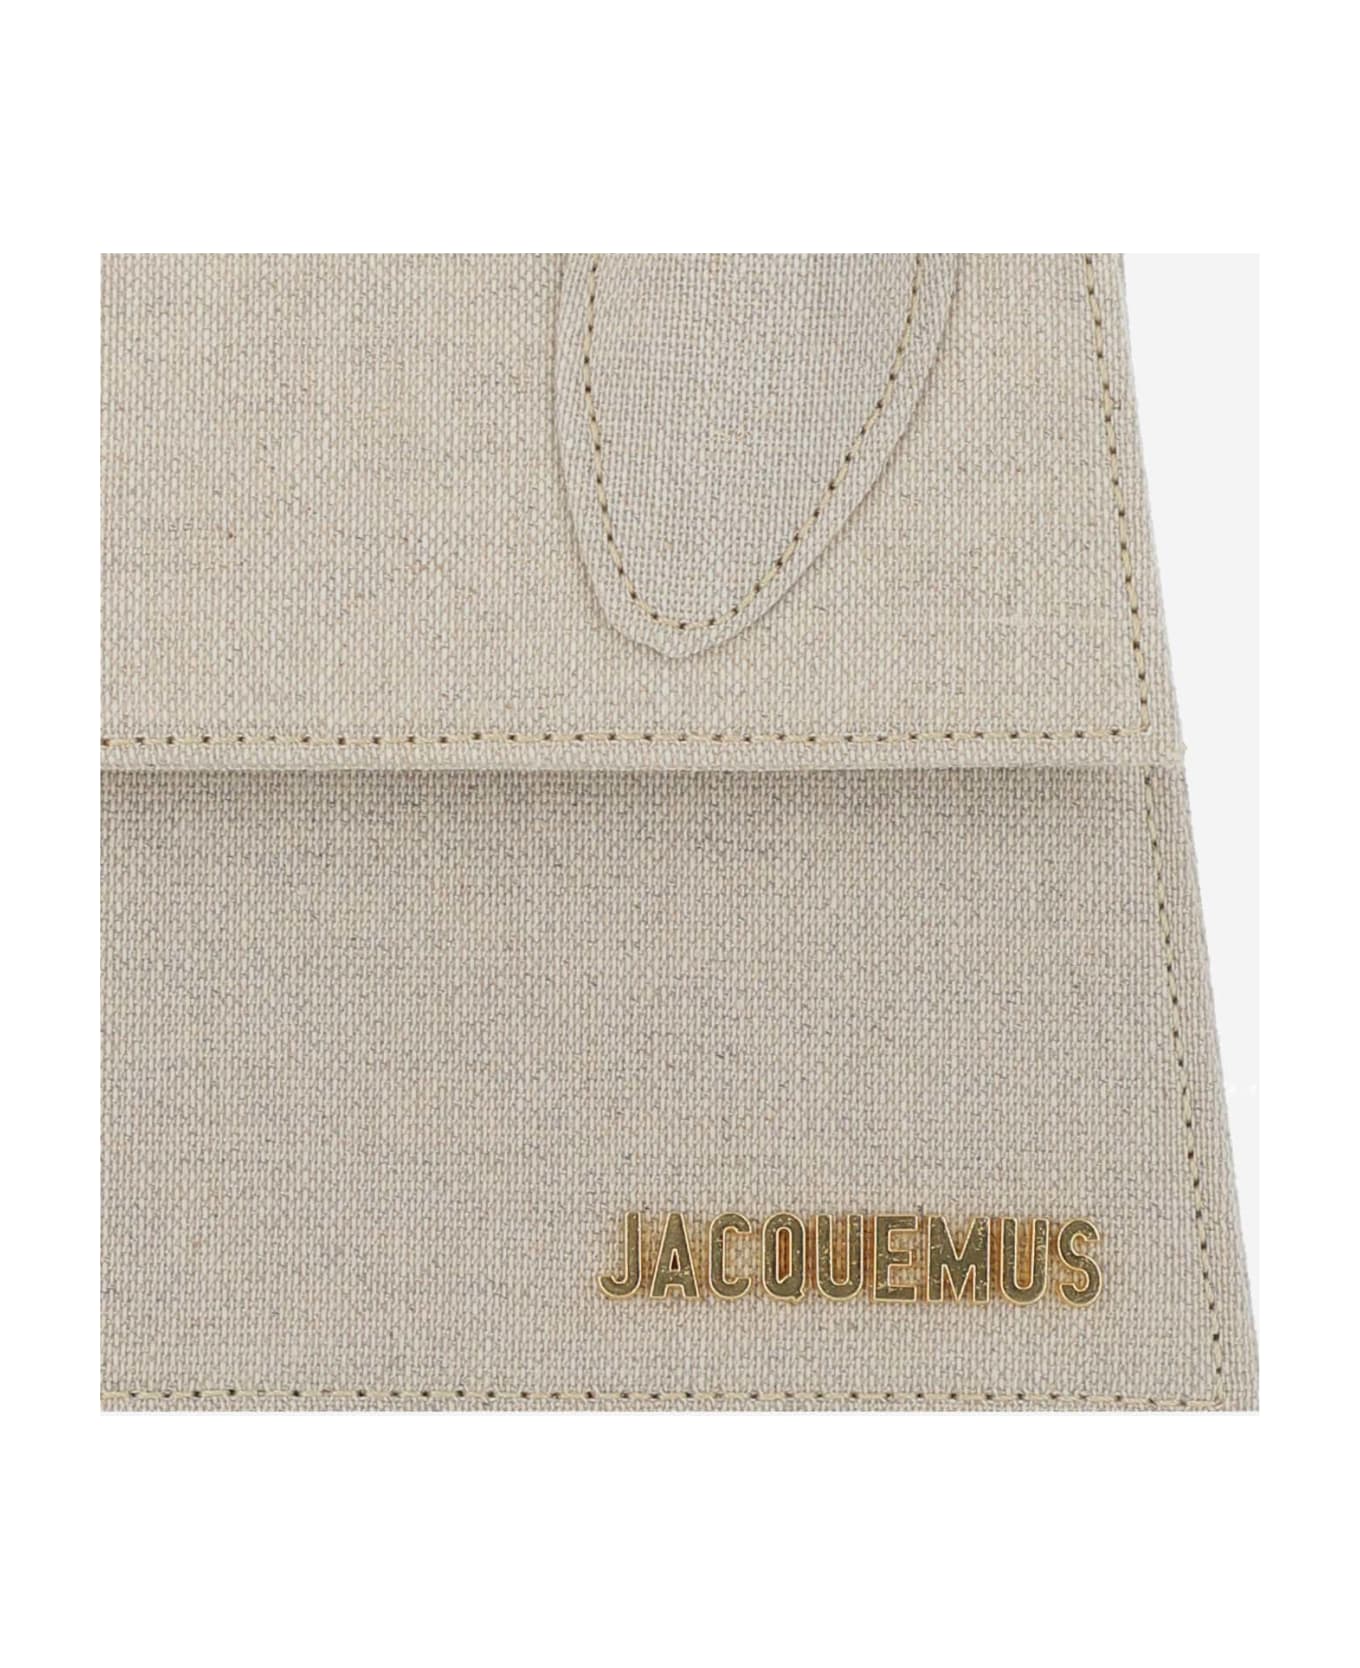 Jacquemus Le Chiquito Moyen Handbag - Beige